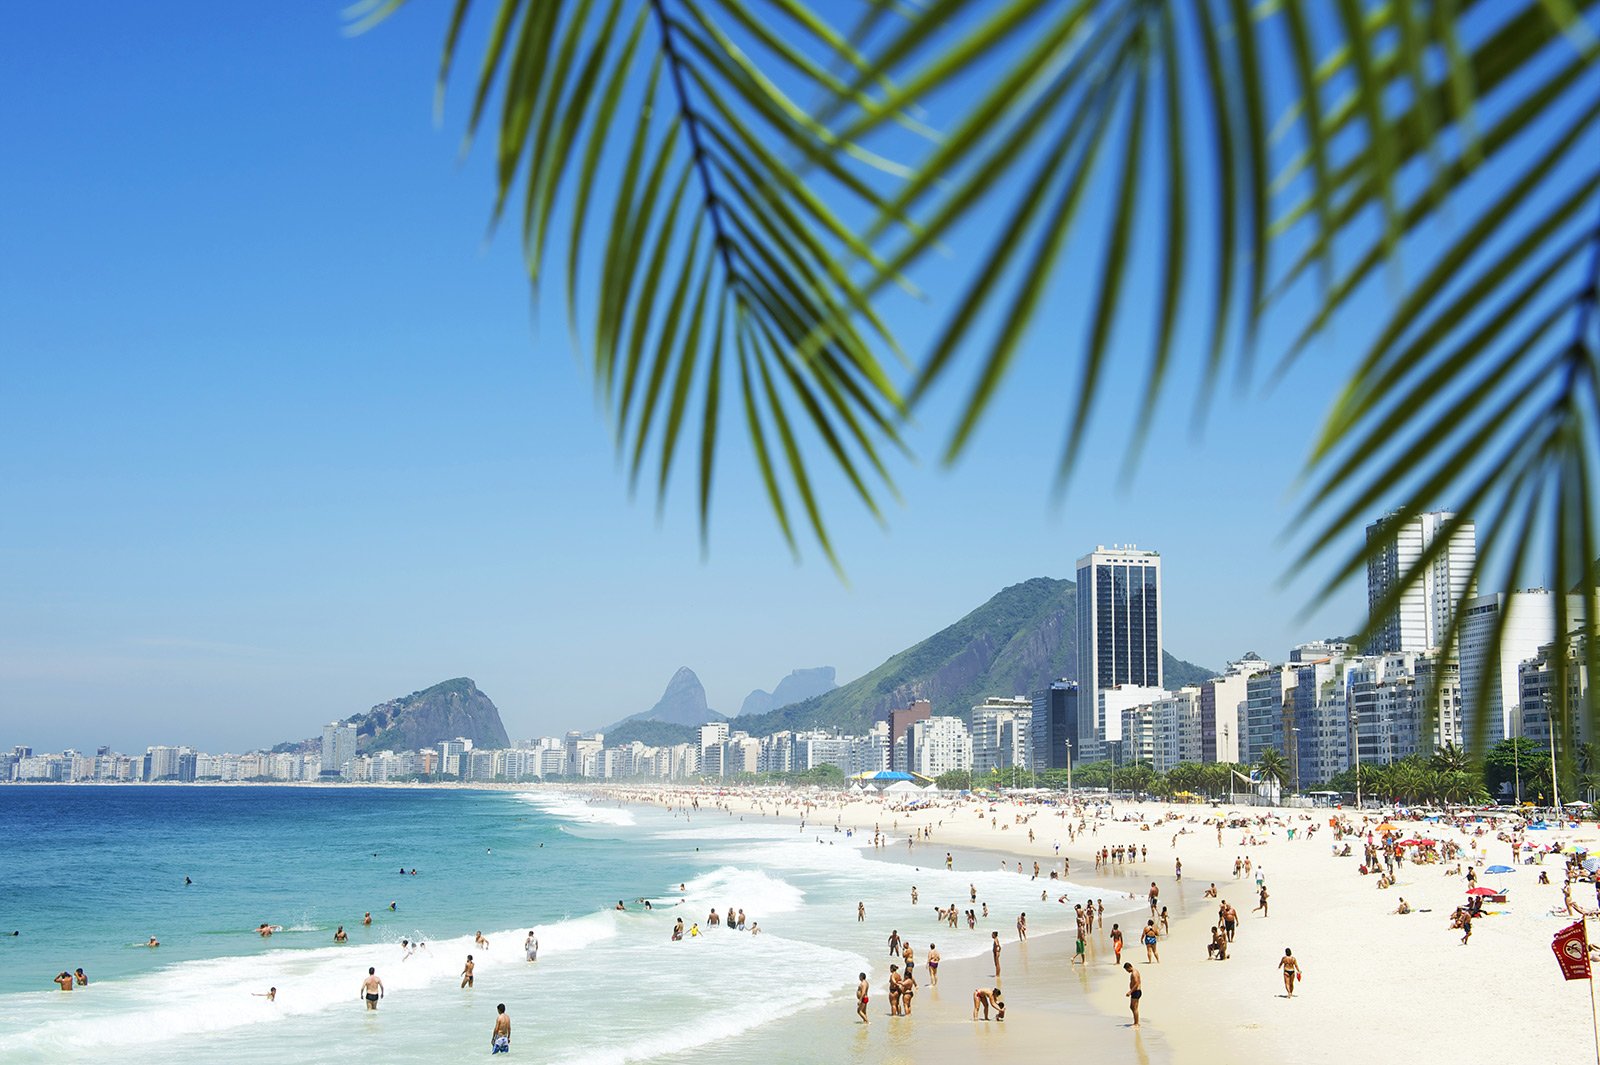 Copacabana Beach - This beach is one of the deadliest beaches in the worl b...